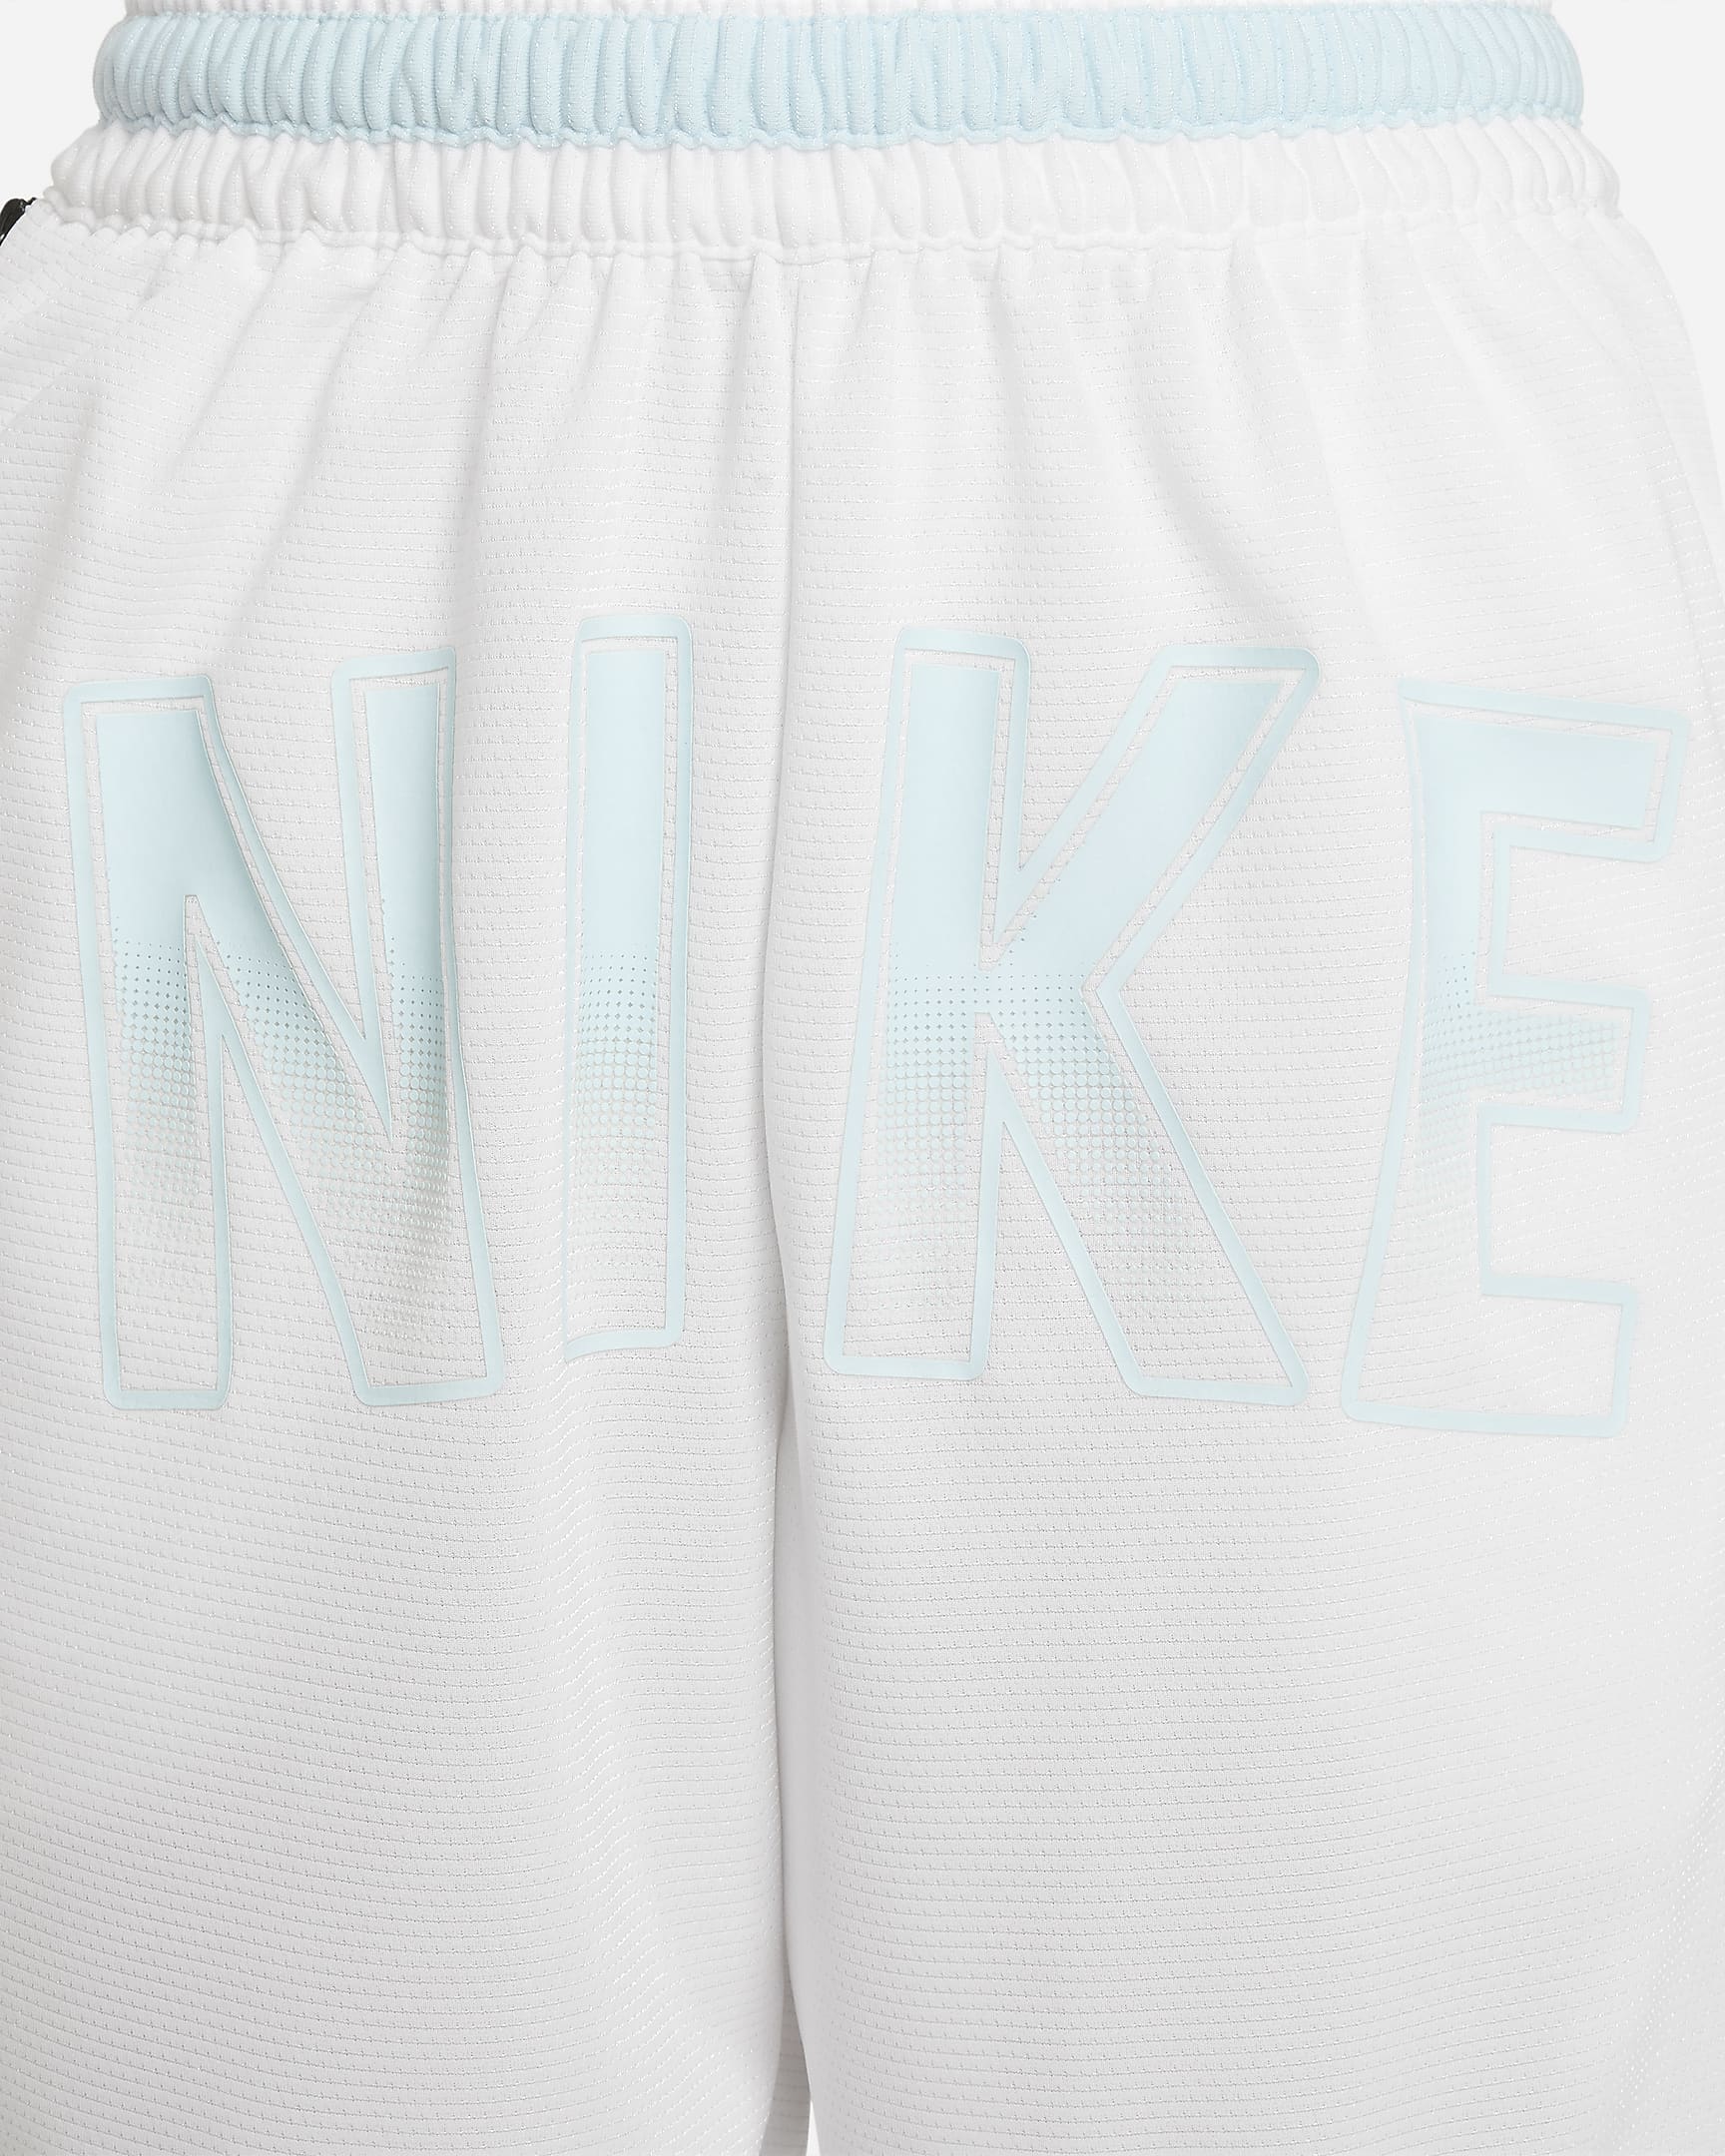 Nike DNA Culture of Basketball Older Kids' Dri-FIT Shorts - White/Glacier Blue